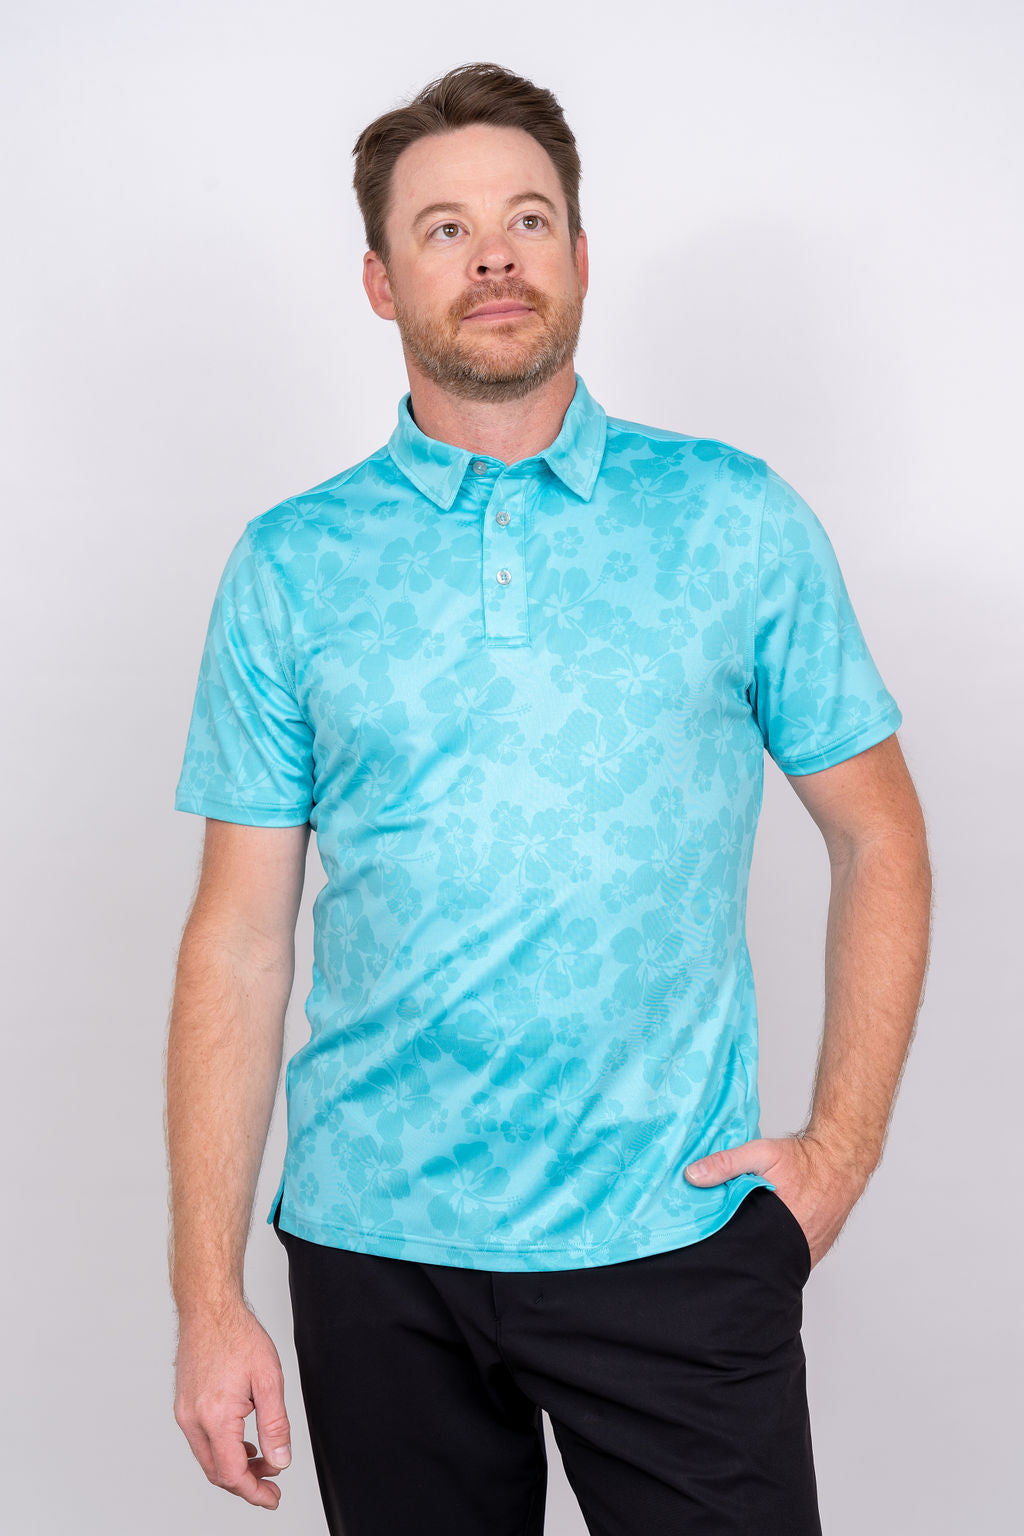 Player's Golf Shirt- Miami Blue Ghost Hibiscus Men's Golf Shirt Taylor Jordan Apparel 